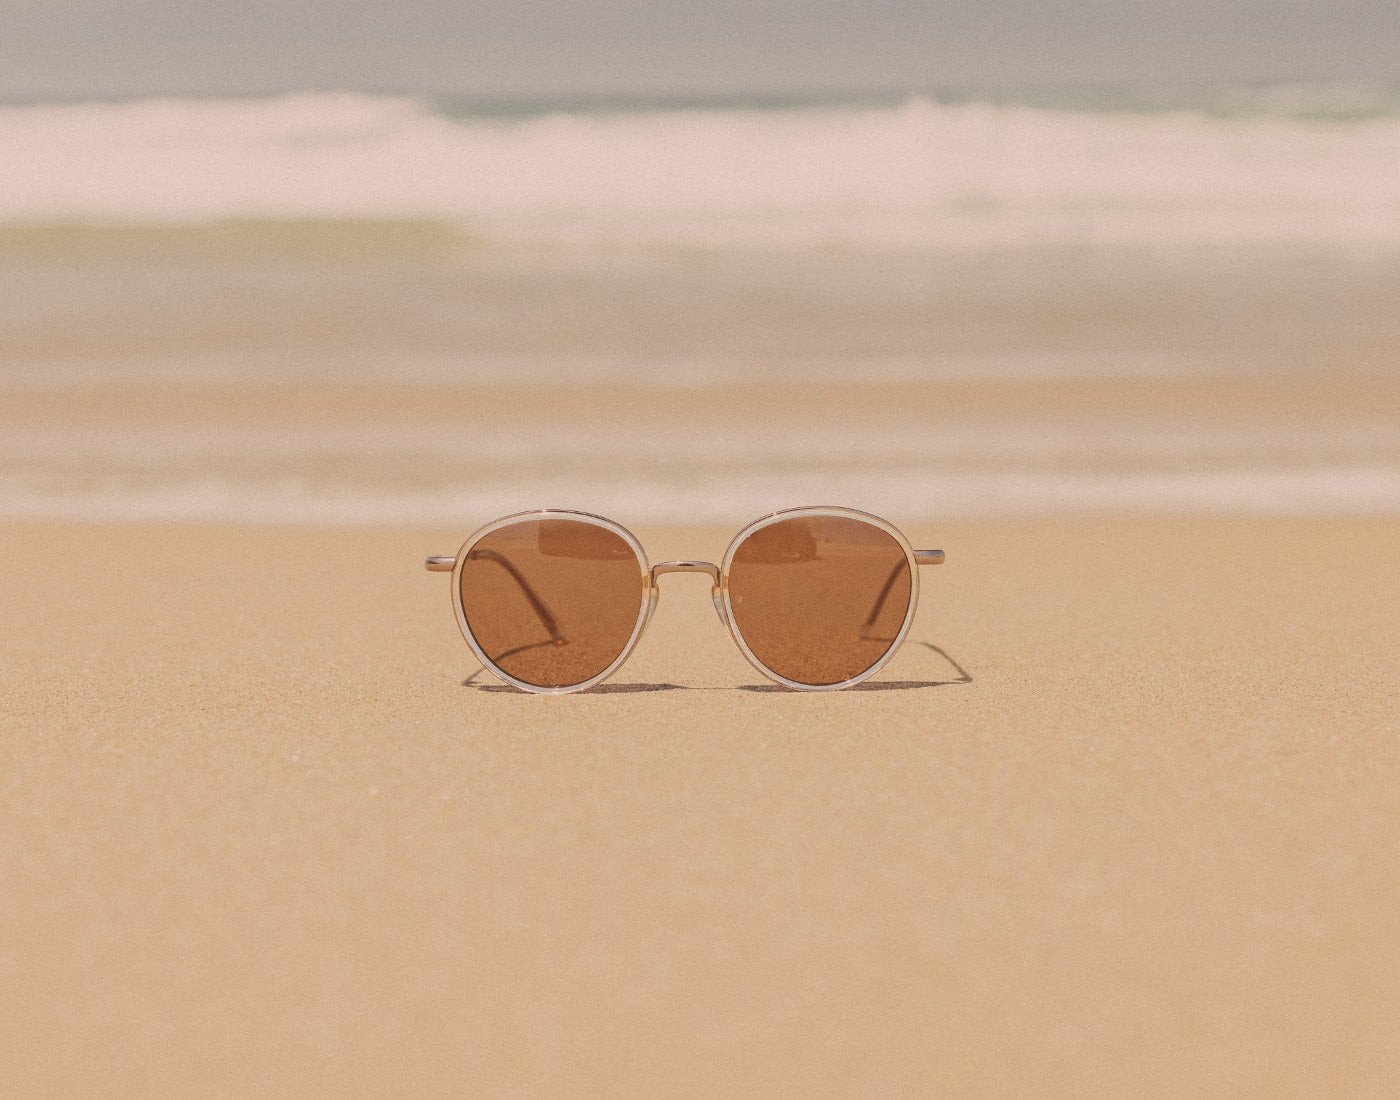 sunski baia sunglasses on the sand